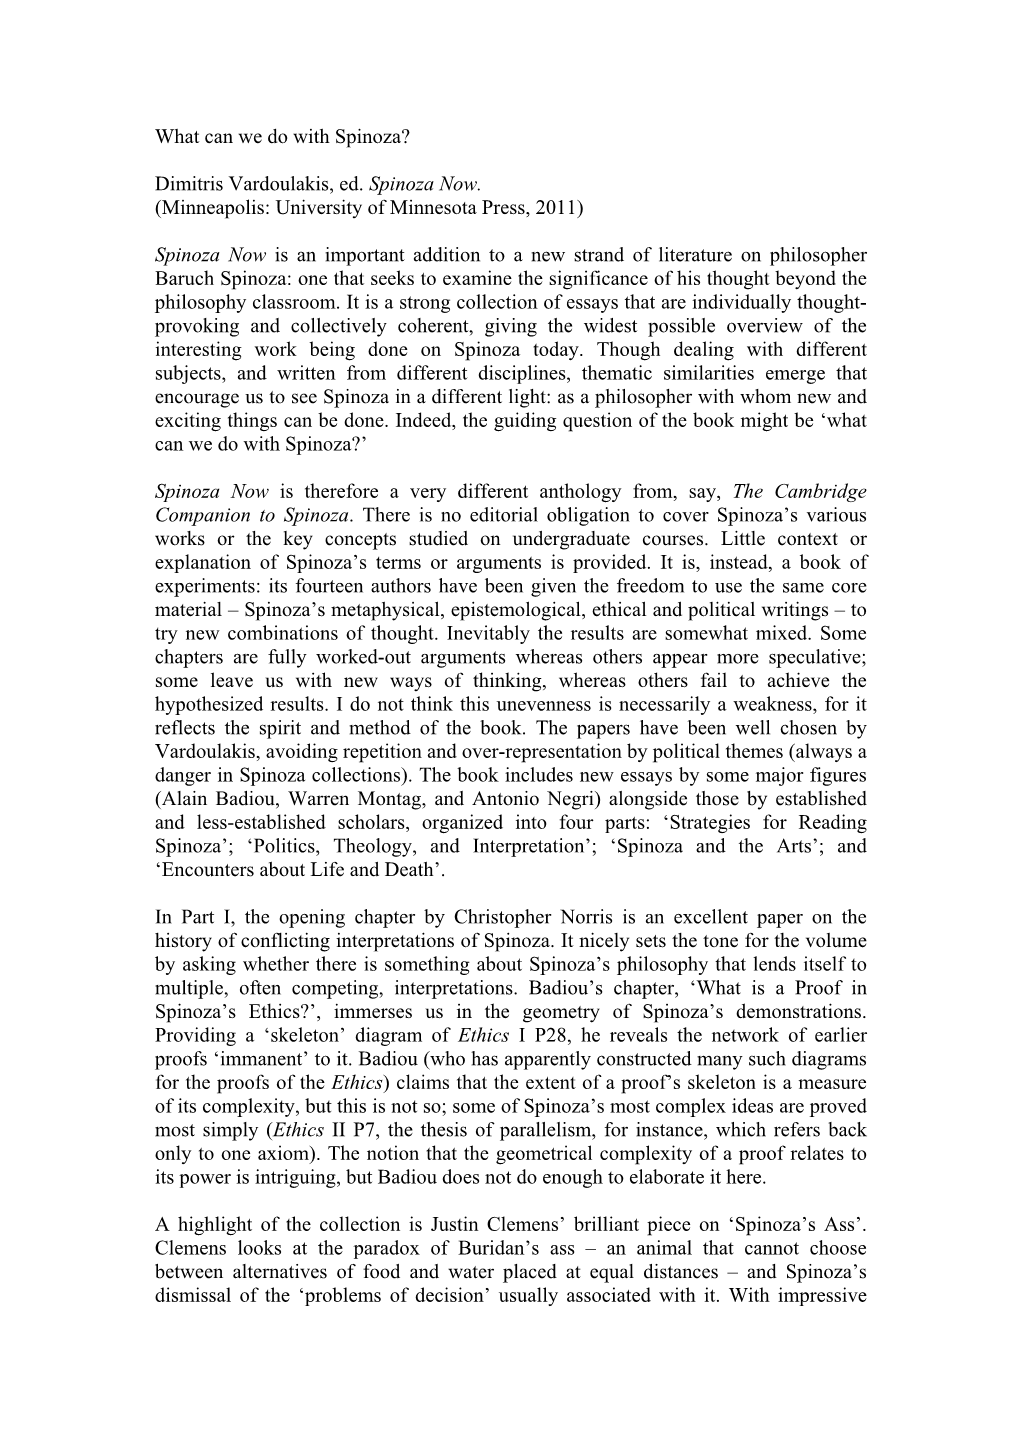 Dimitris Vardoulakis, Ed. Spinoza Now. (Minneapolis: University of Minnesota Press, 2011)